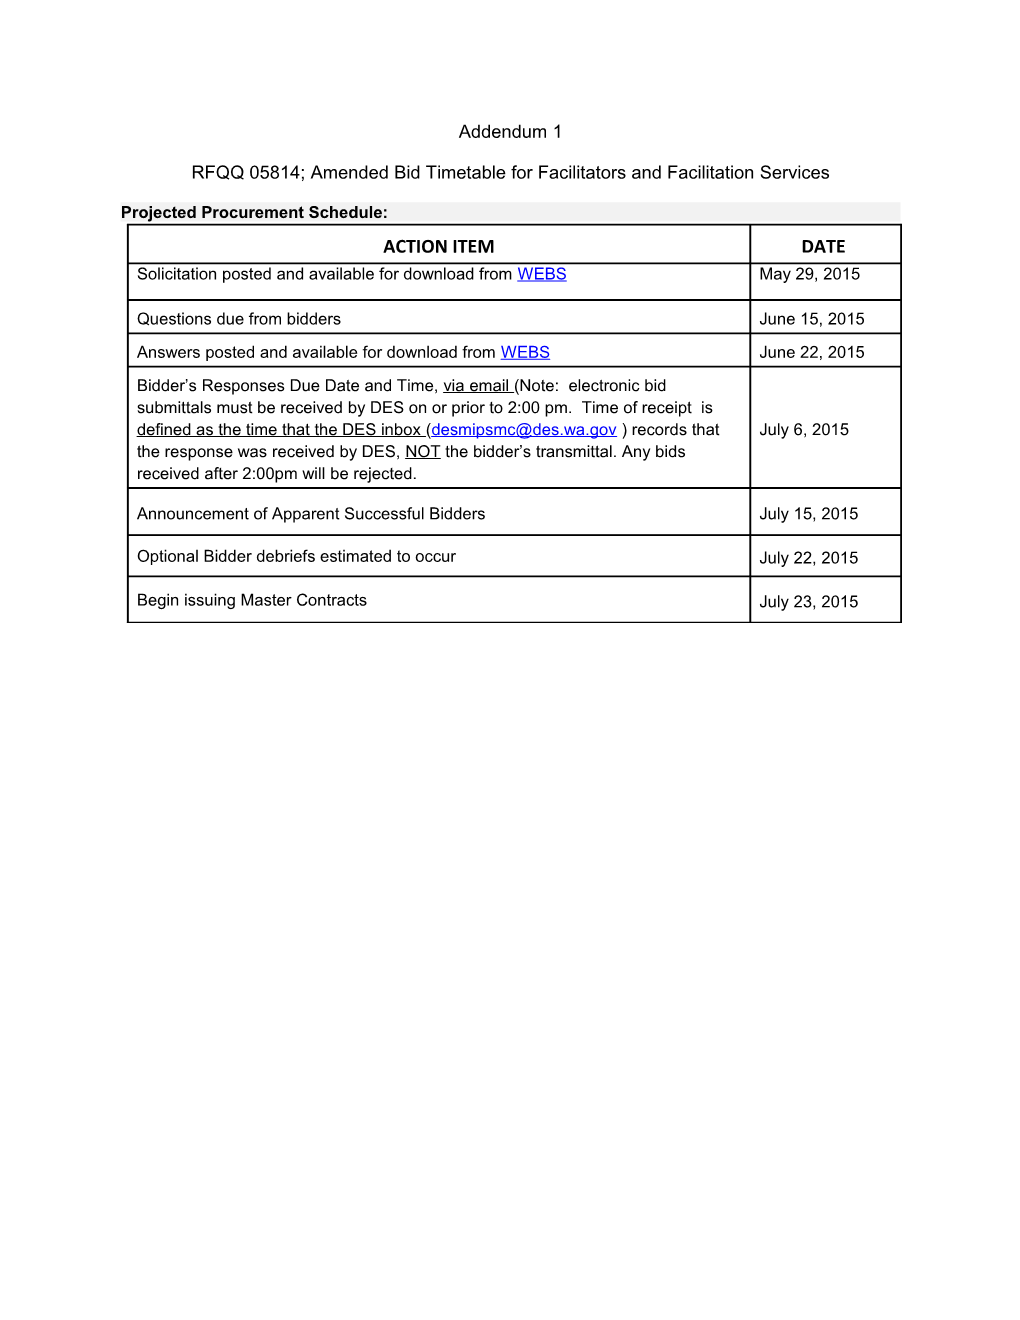 RFQQ 05814; Amended Bid Timetable for Facilitators and Facilitation Services